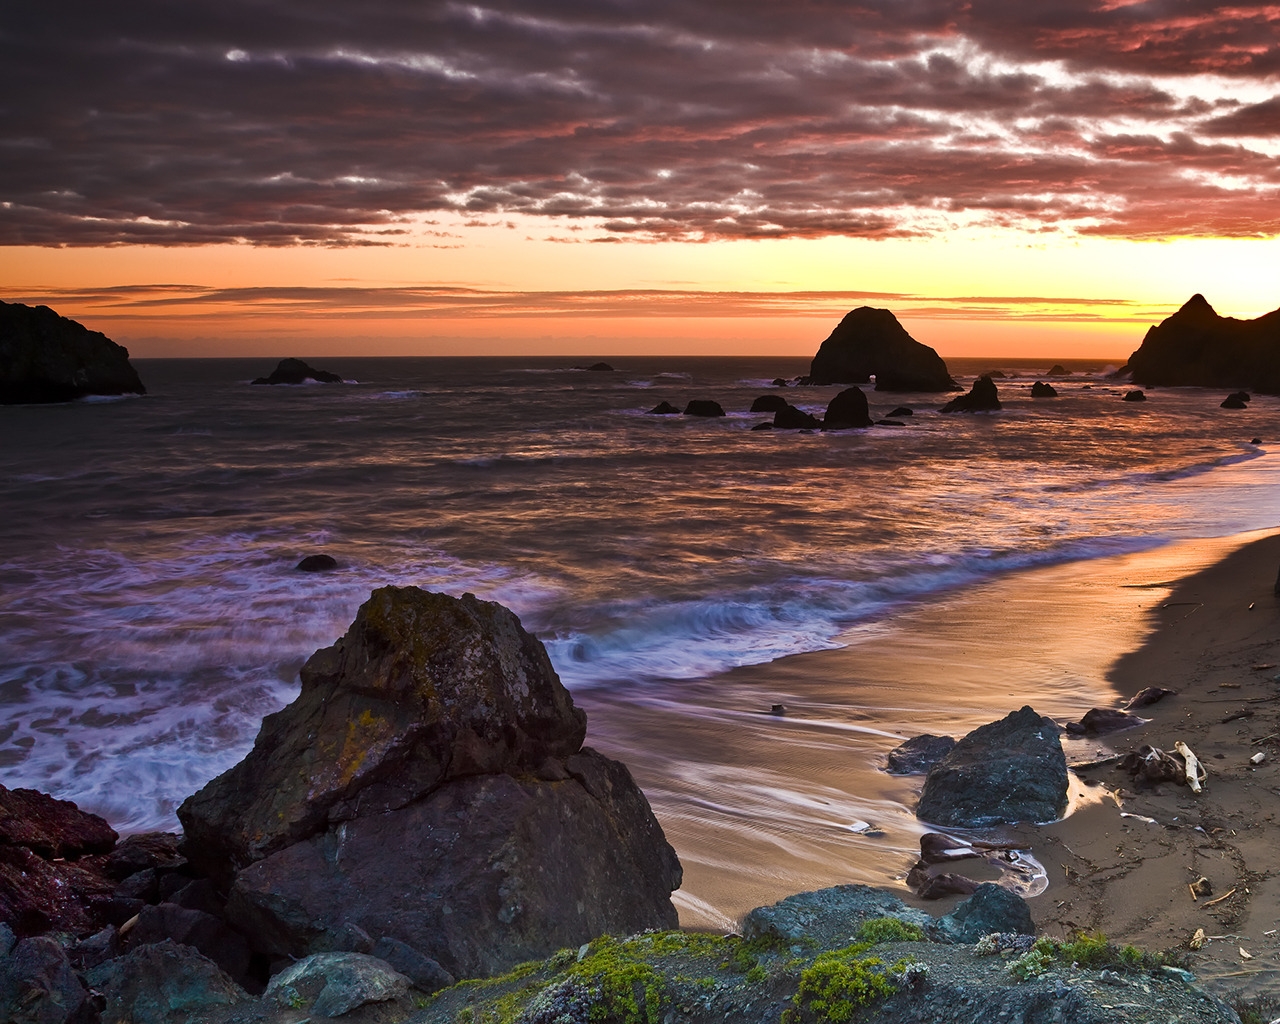 Sonoma Coast for 1280 x 1024 resolution